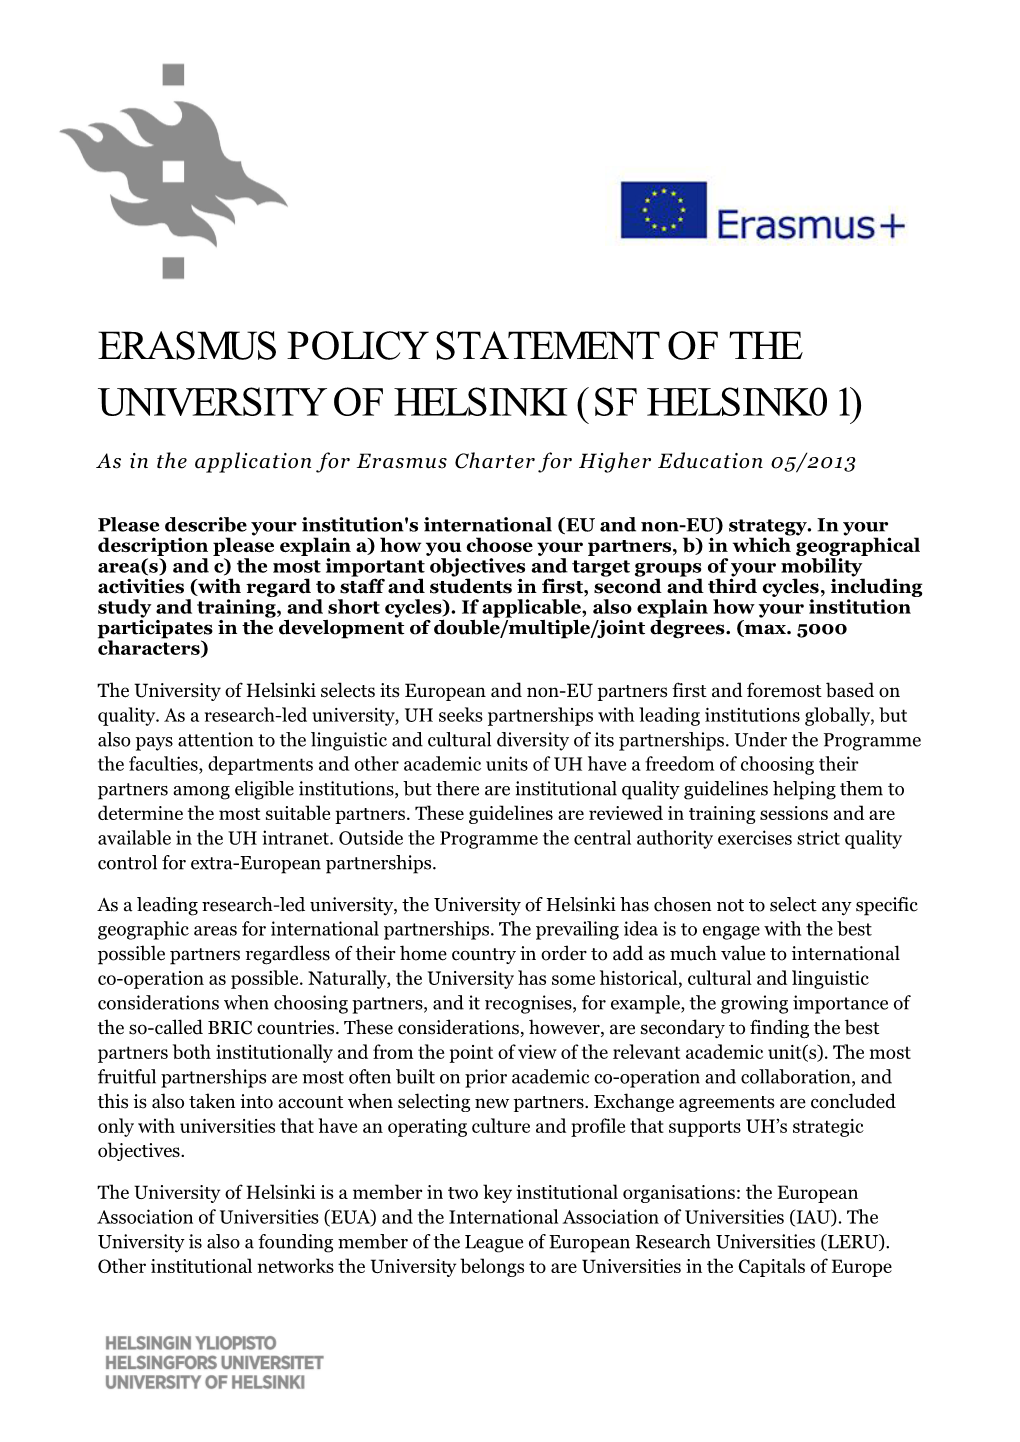 Erasmus Policy Statement of the University of Helsinki (Sf Helsink01)